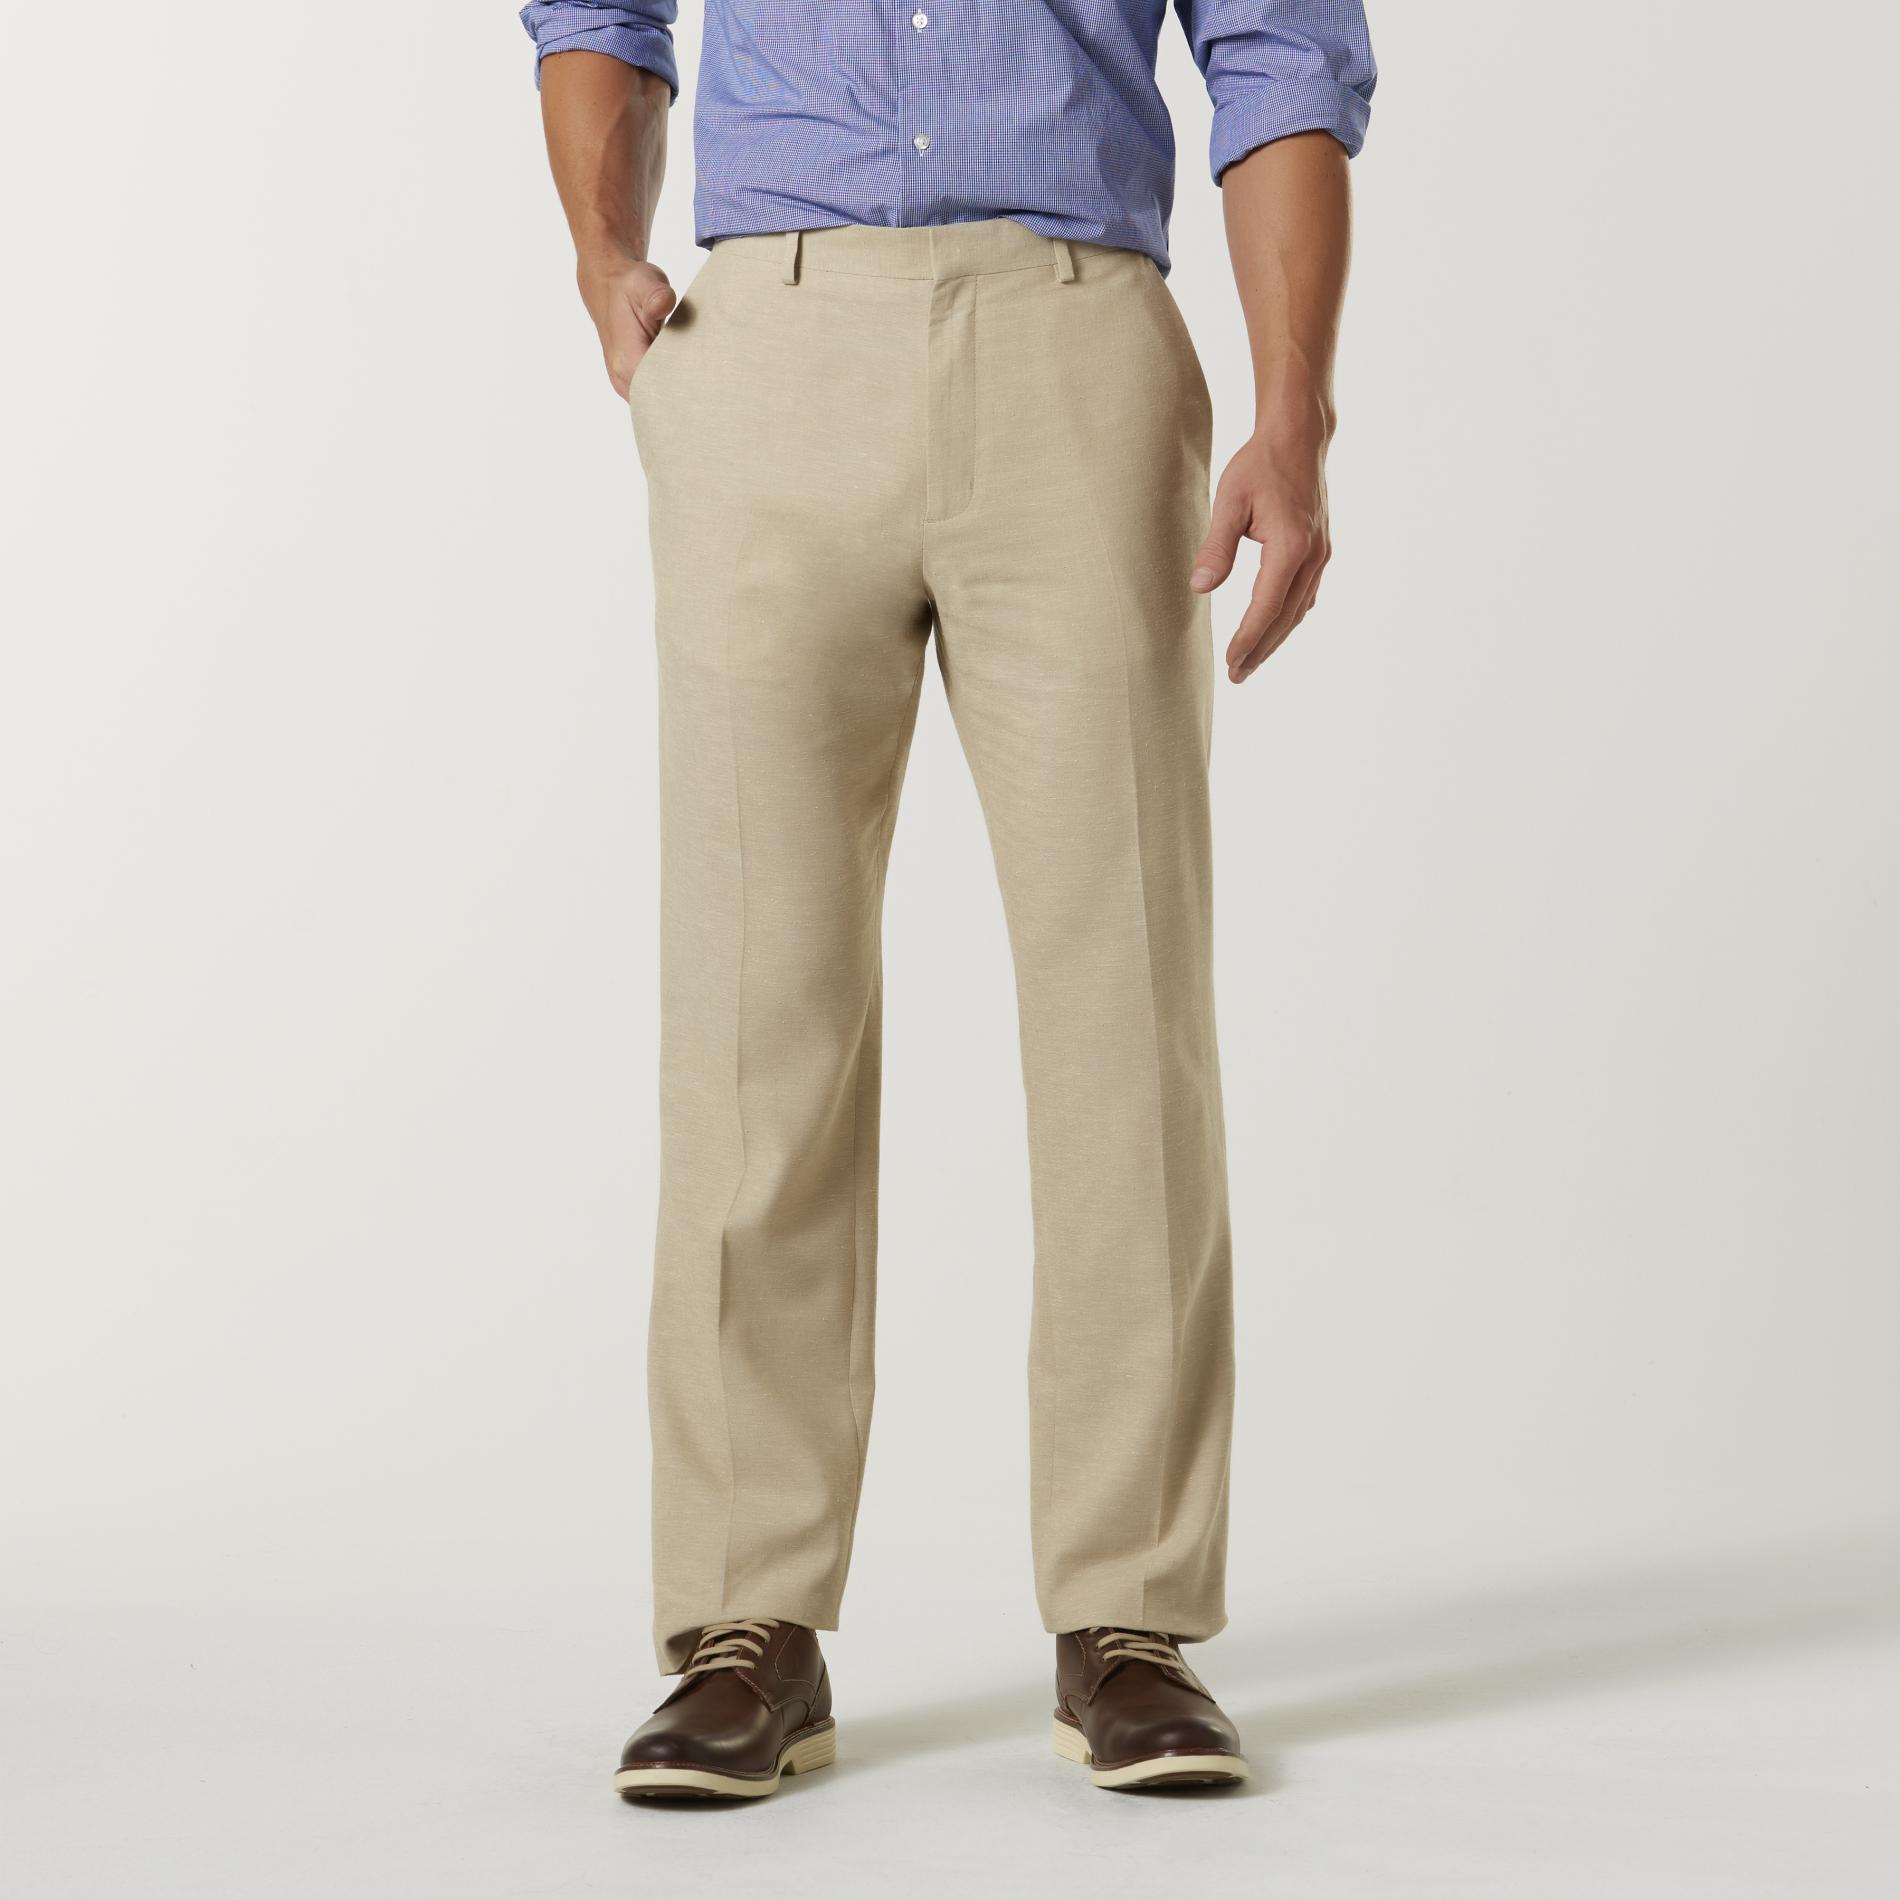 David Taylor Collection DAVID TAYLOR RESORT Men's Linen Pants, Size: 32x32, Fog